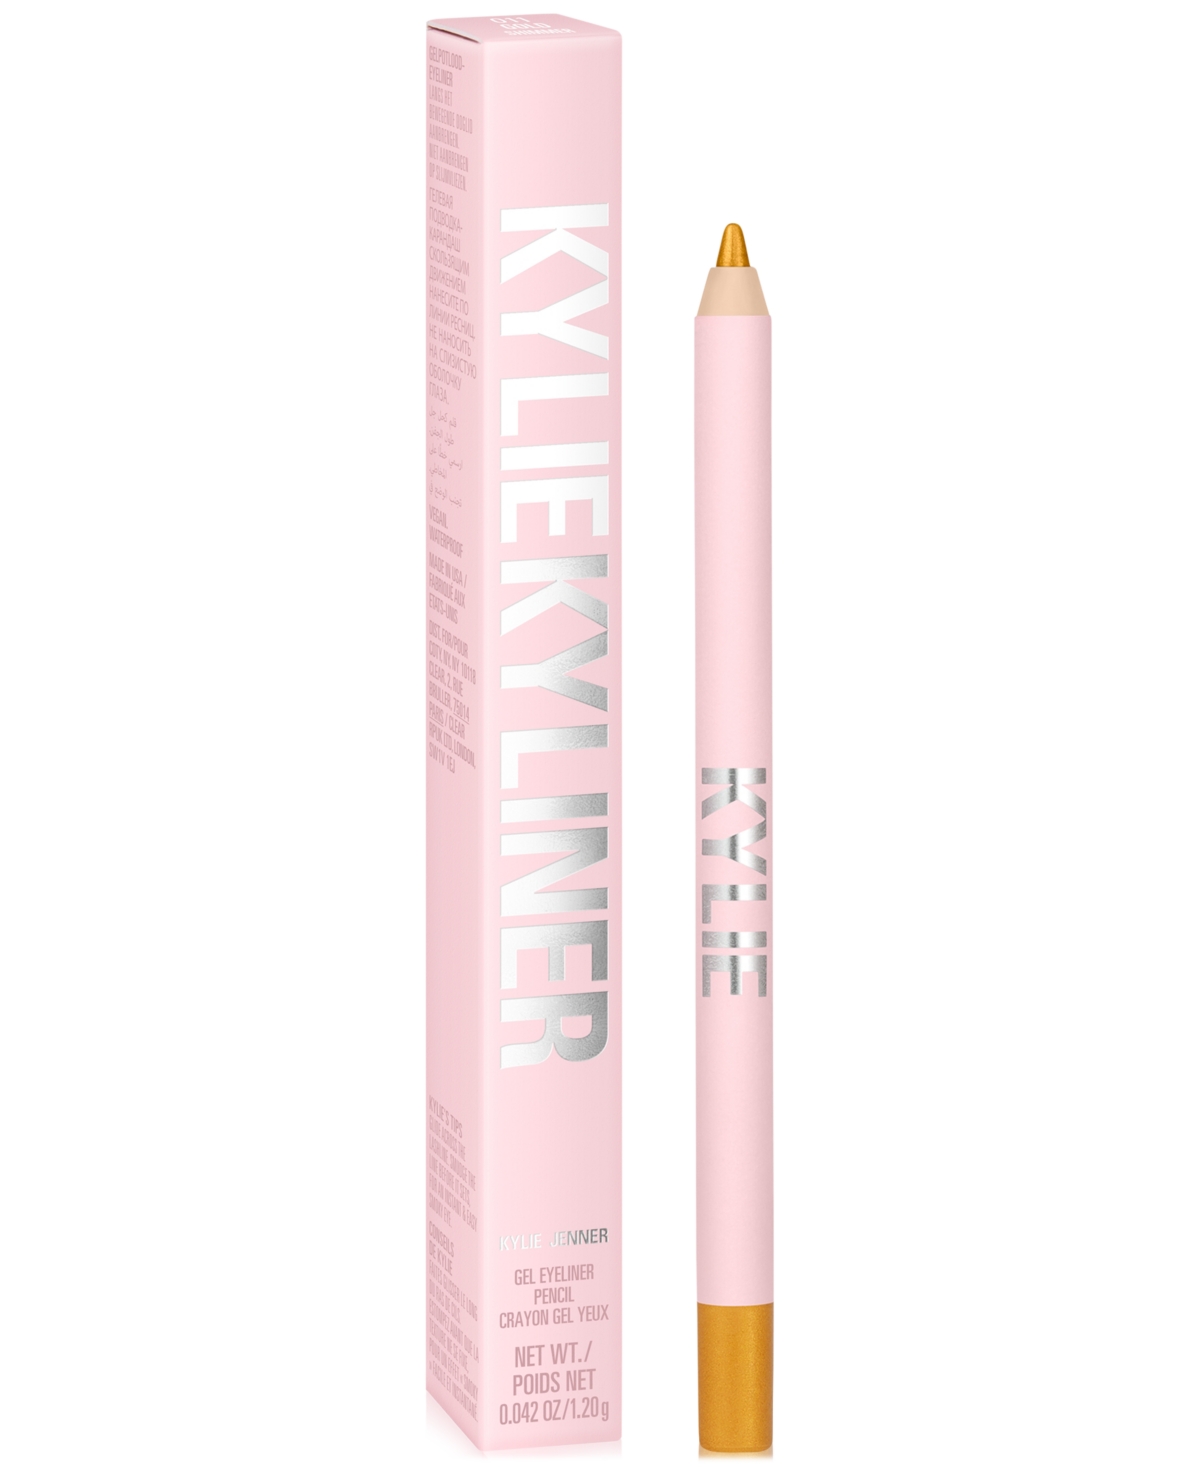 Kylie Cosmetics Kyliner Gel Eyeliner Pencil In Shimmery Gold